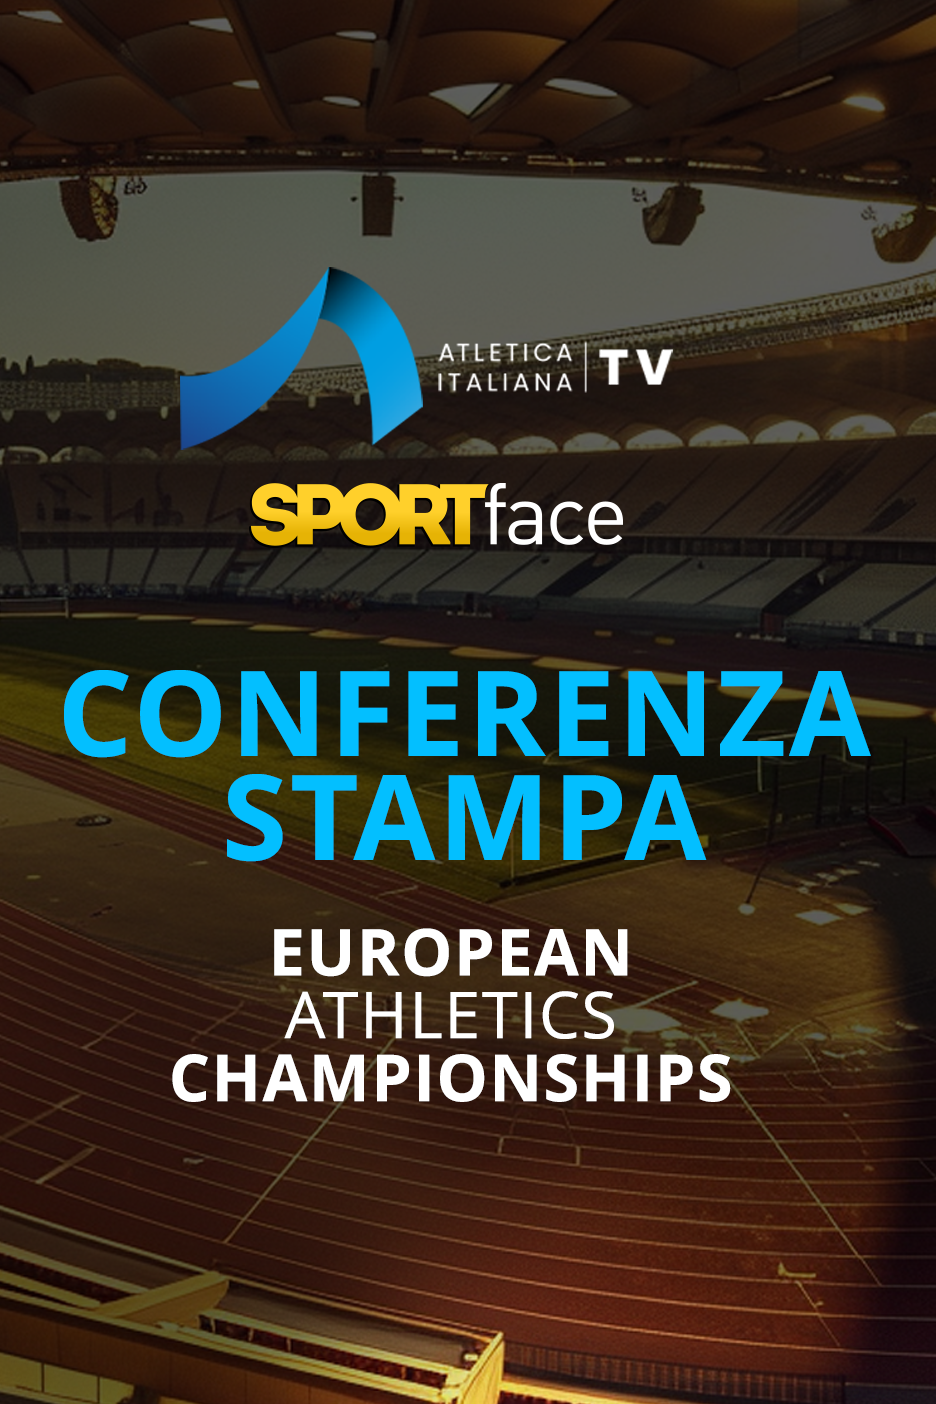  European Athletics Championships Conferenza Stampa 